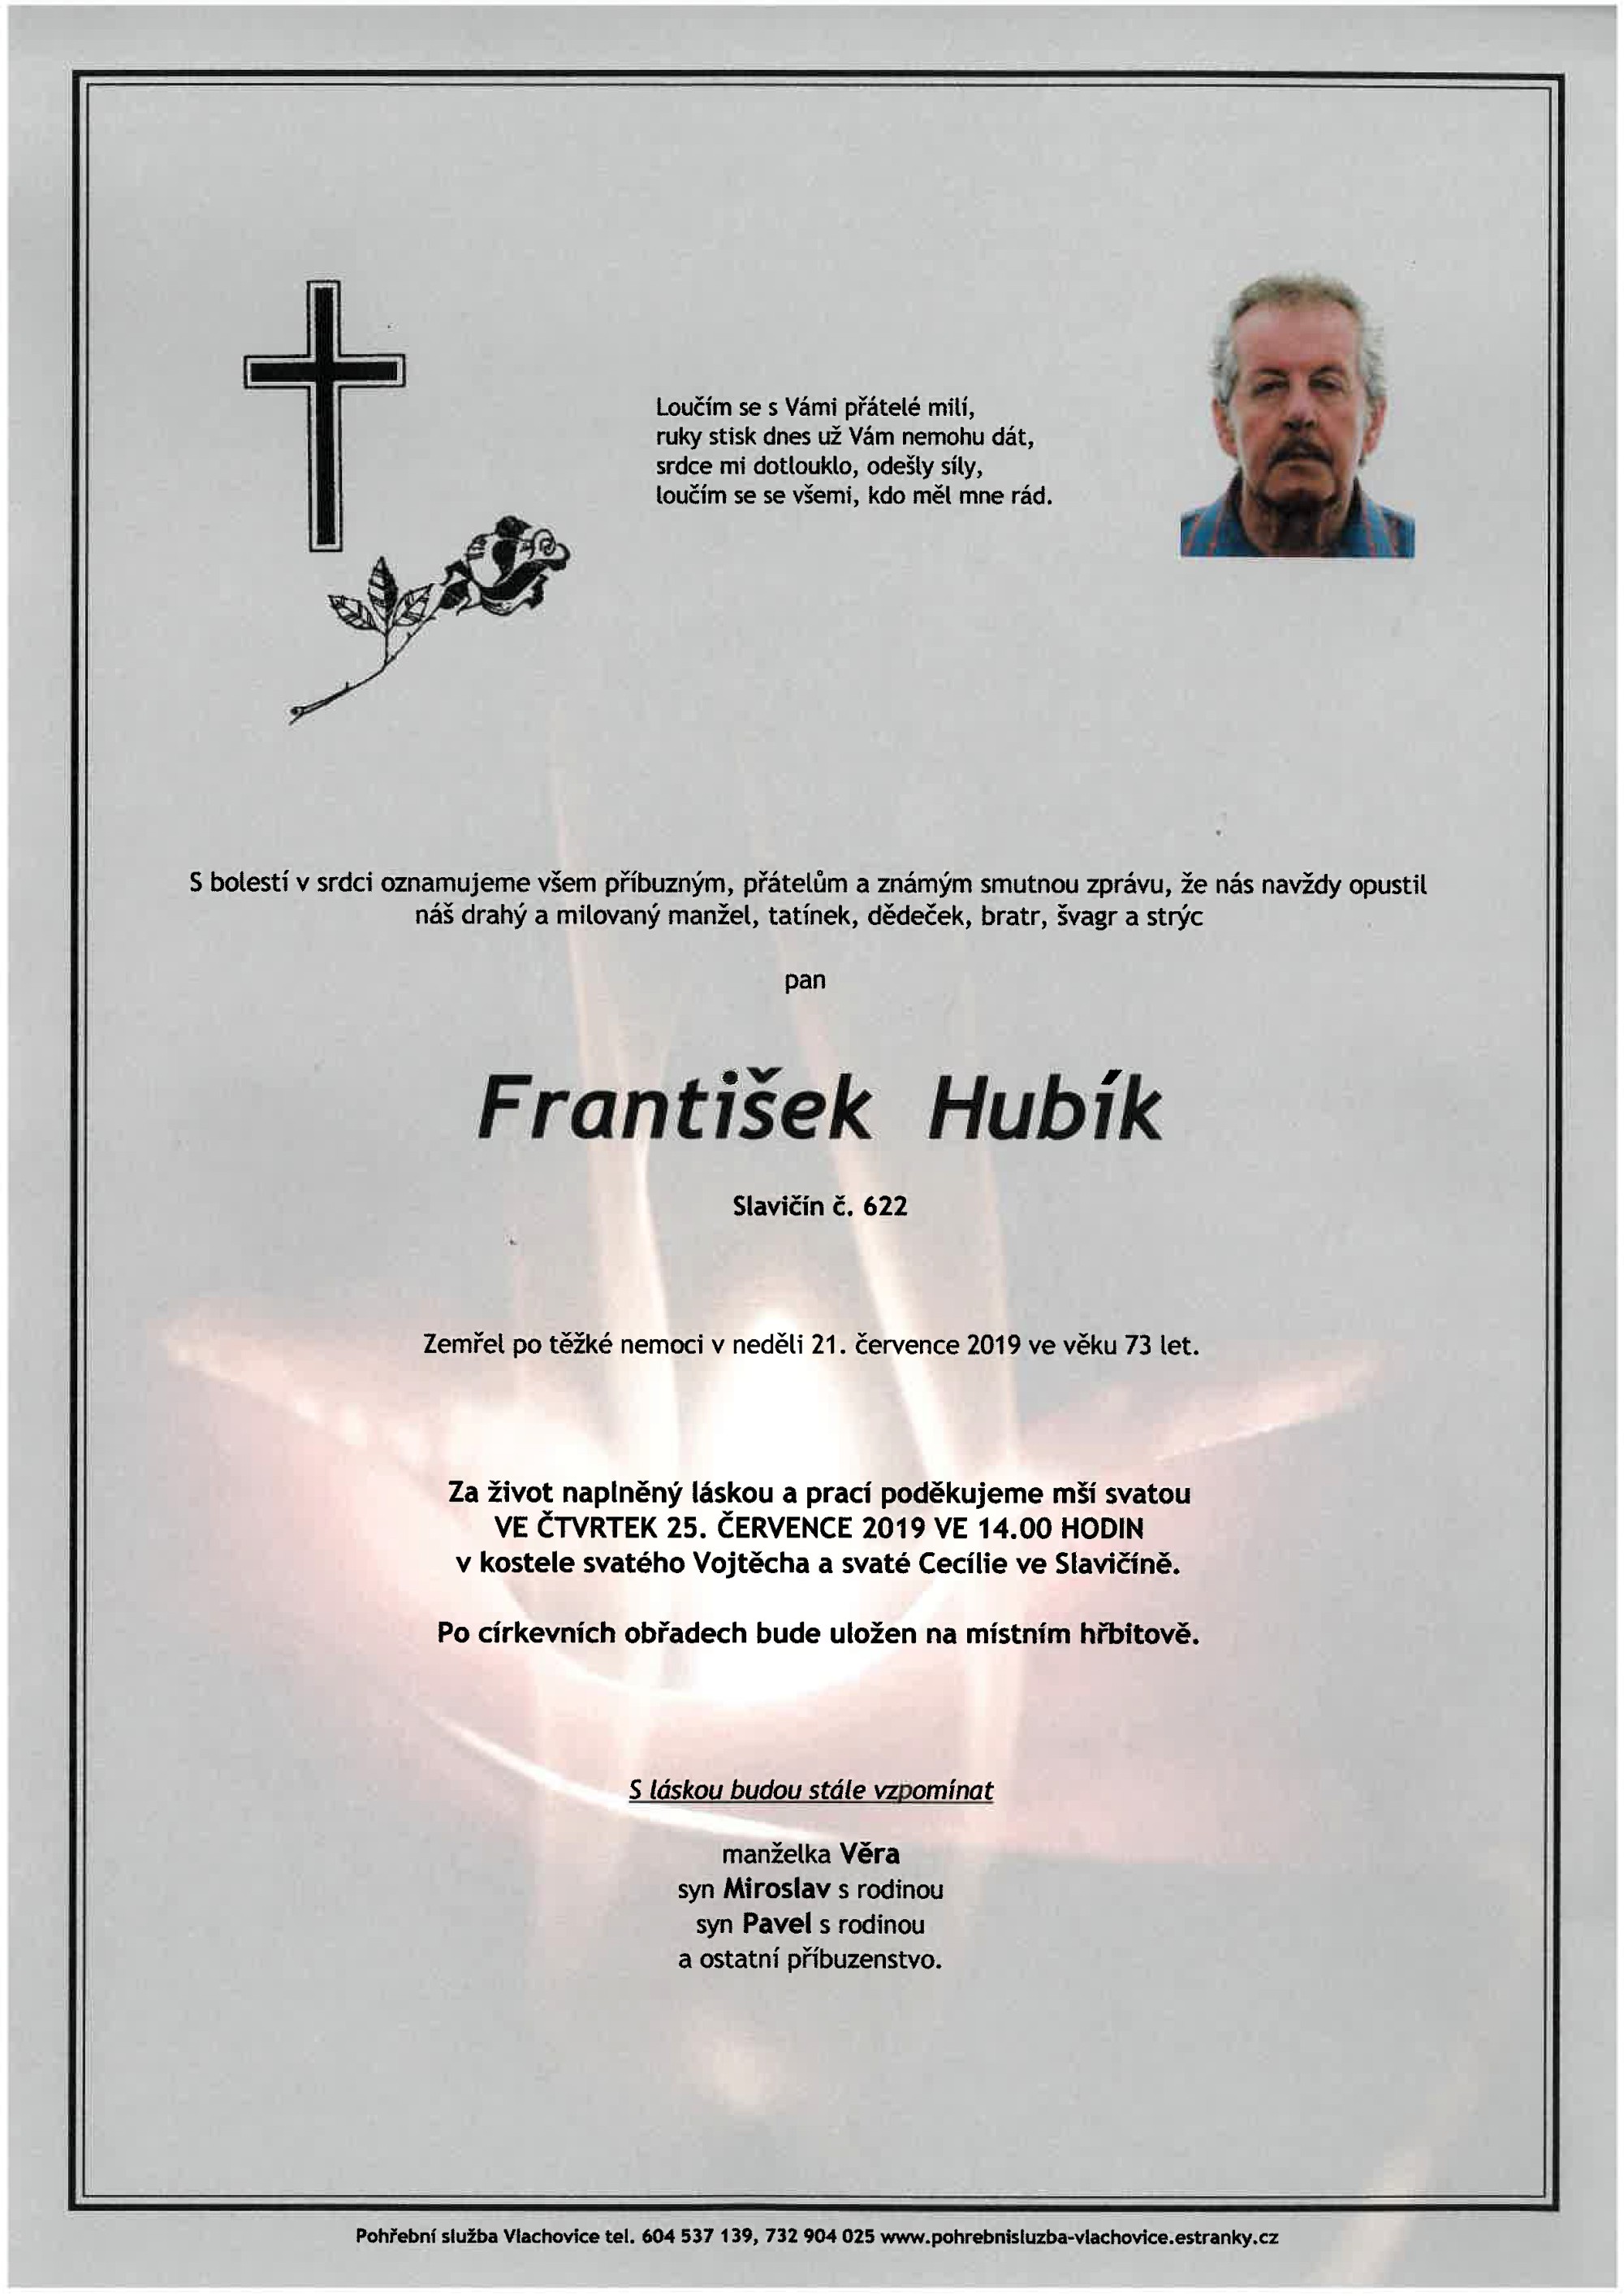 František Hubík